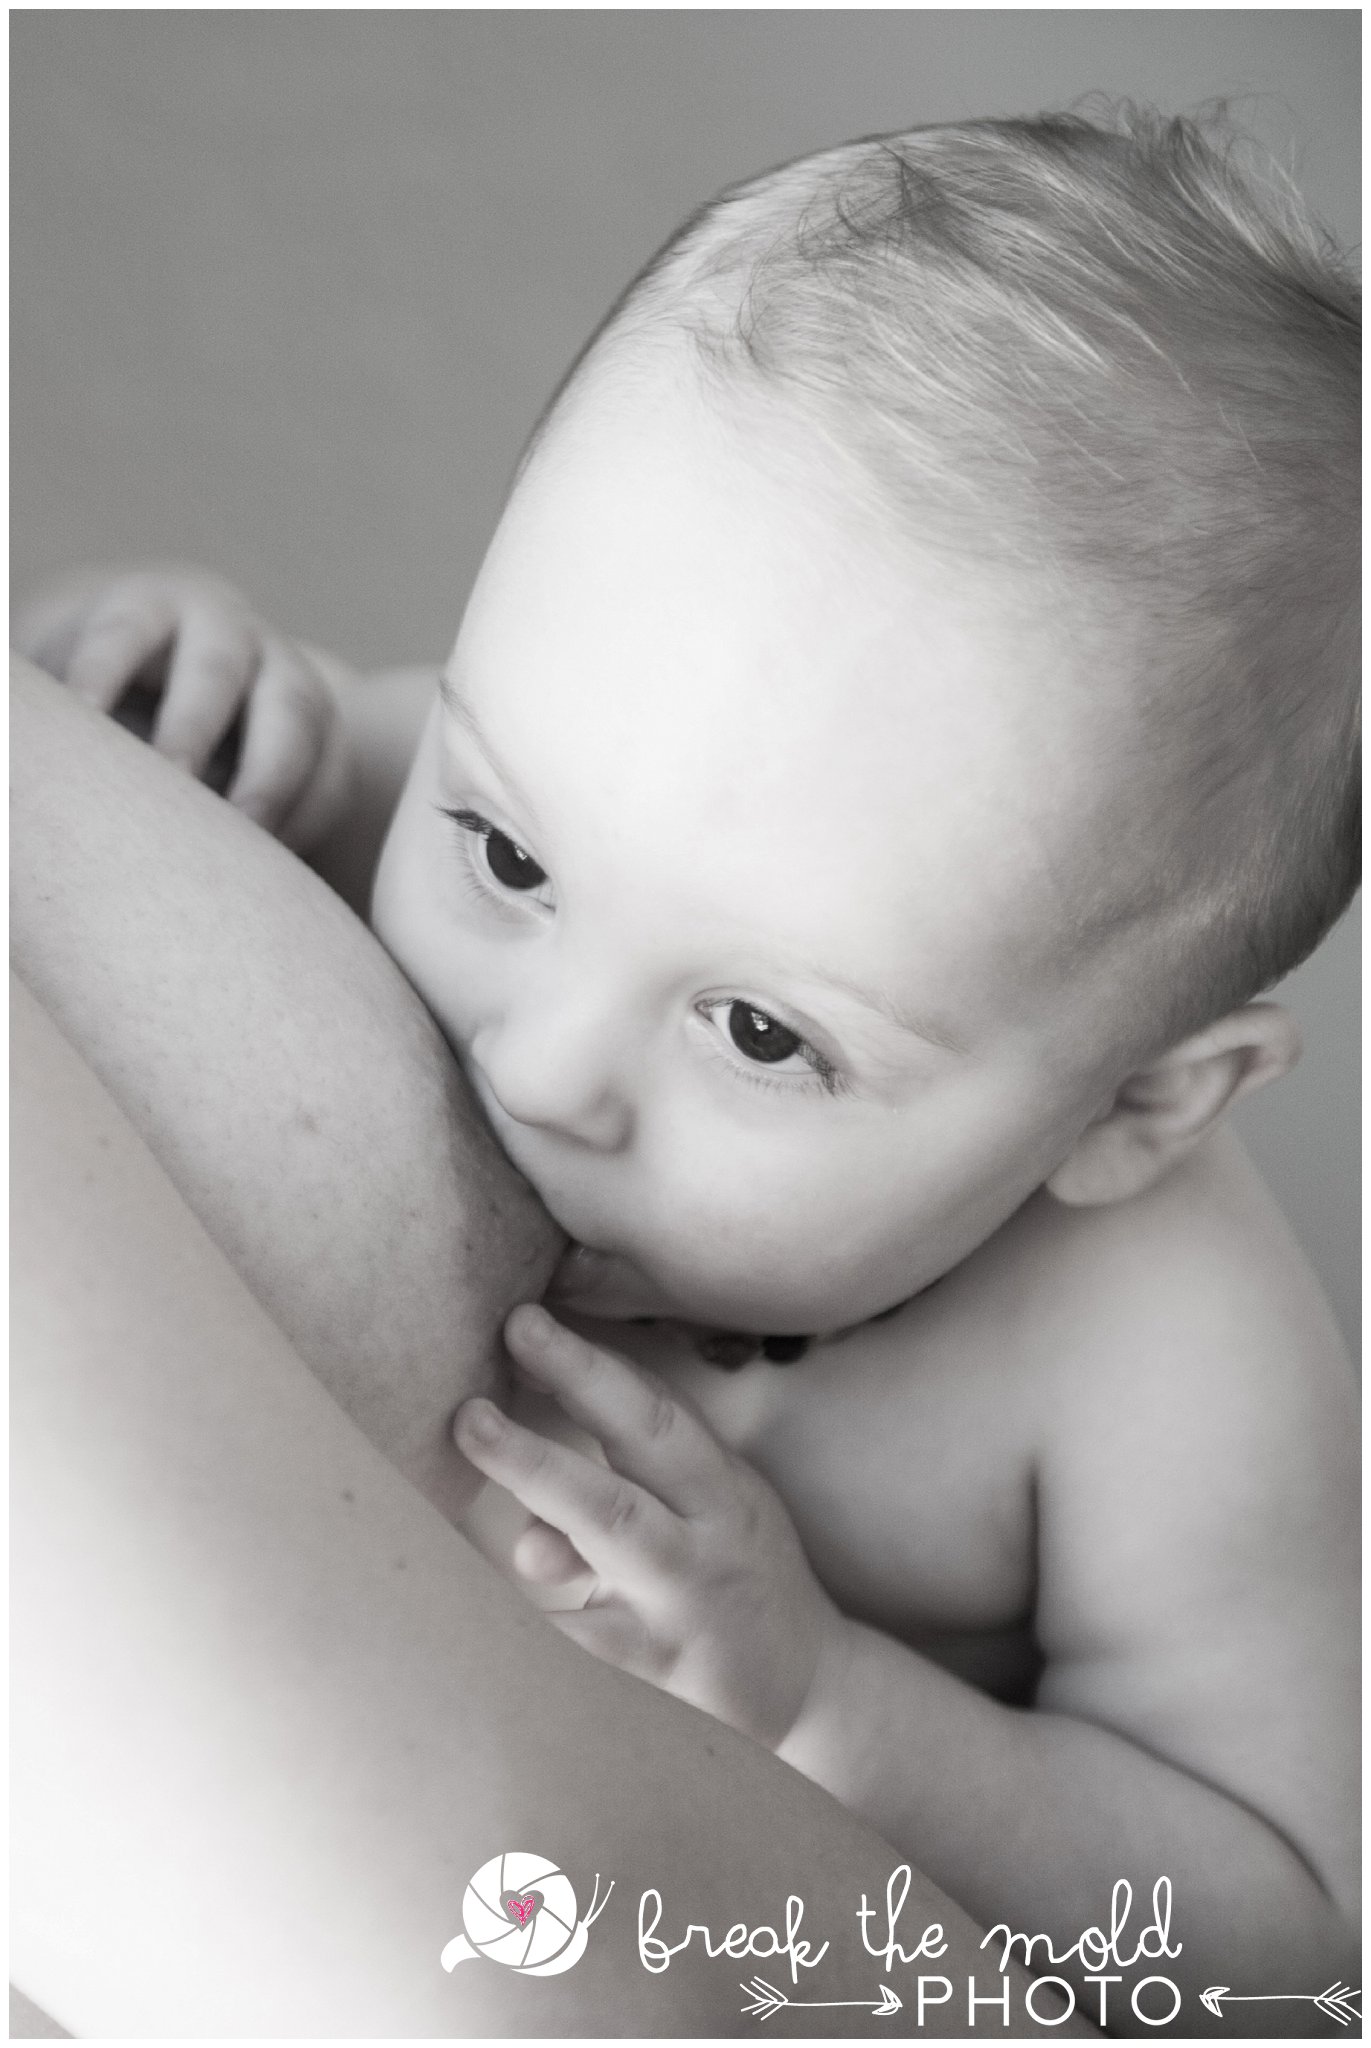 break-the-mold-photo-nursing-body-love-baby-pregnant-women-powerful-breastfeeding-sessions_7216.jpg